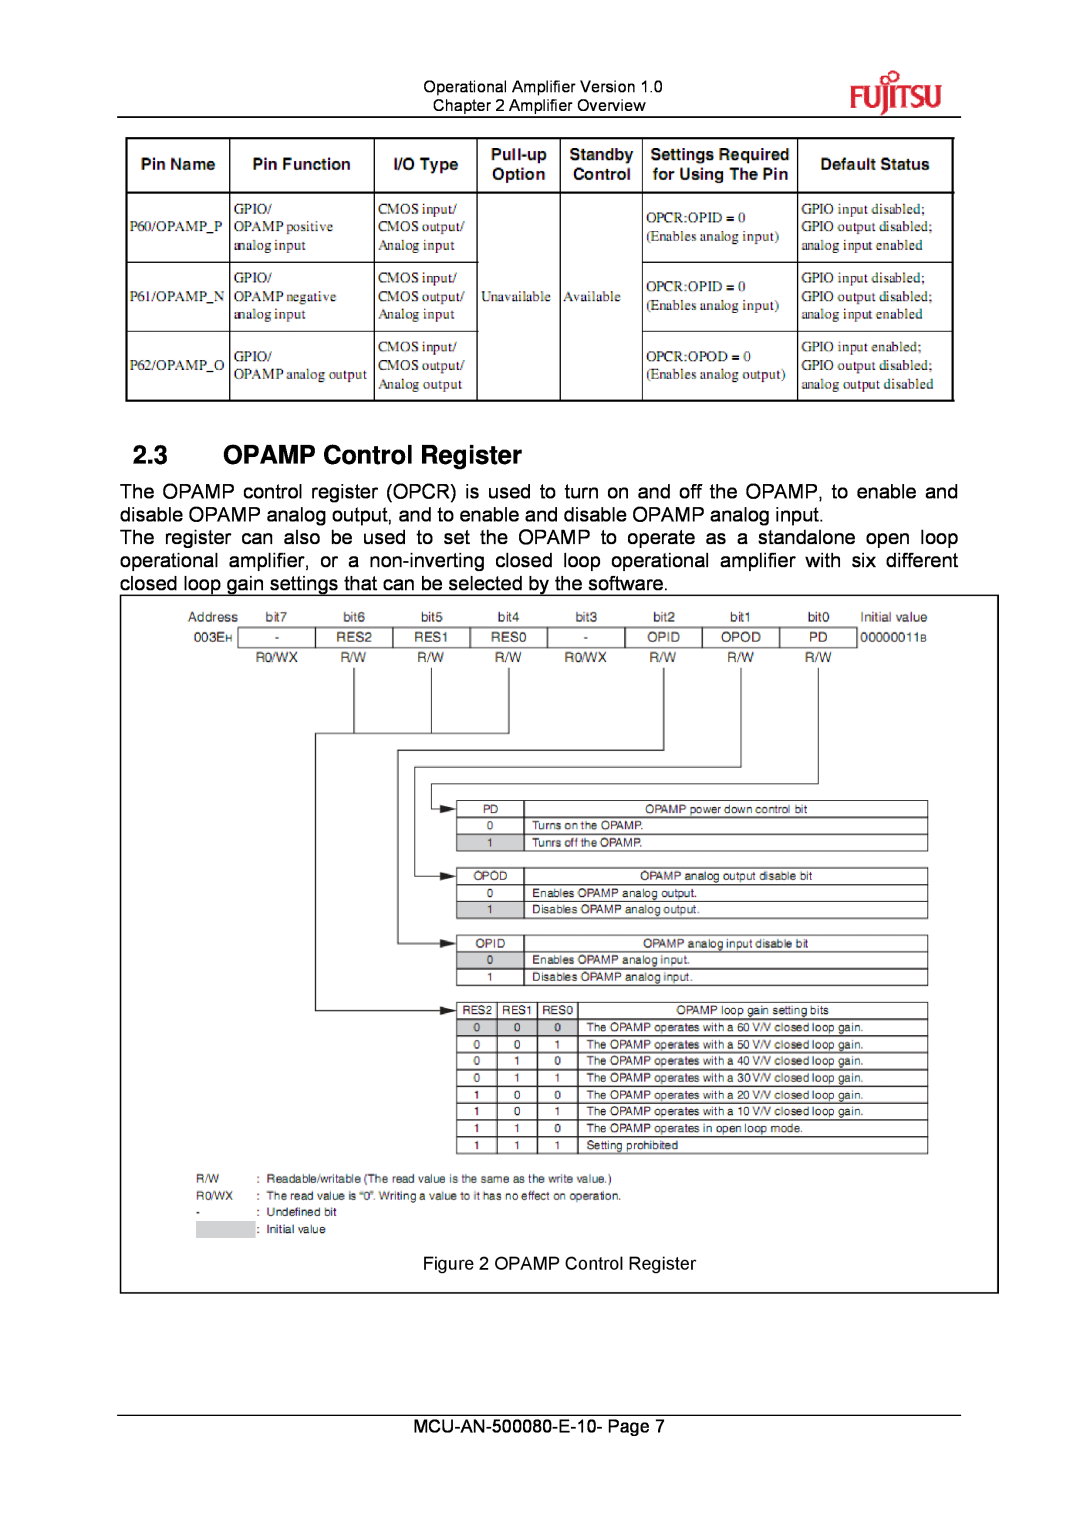 Fujitsu MB95F430 manual 2.3OPAMP Control Register, MCU-AN-500080-E-10-Page 